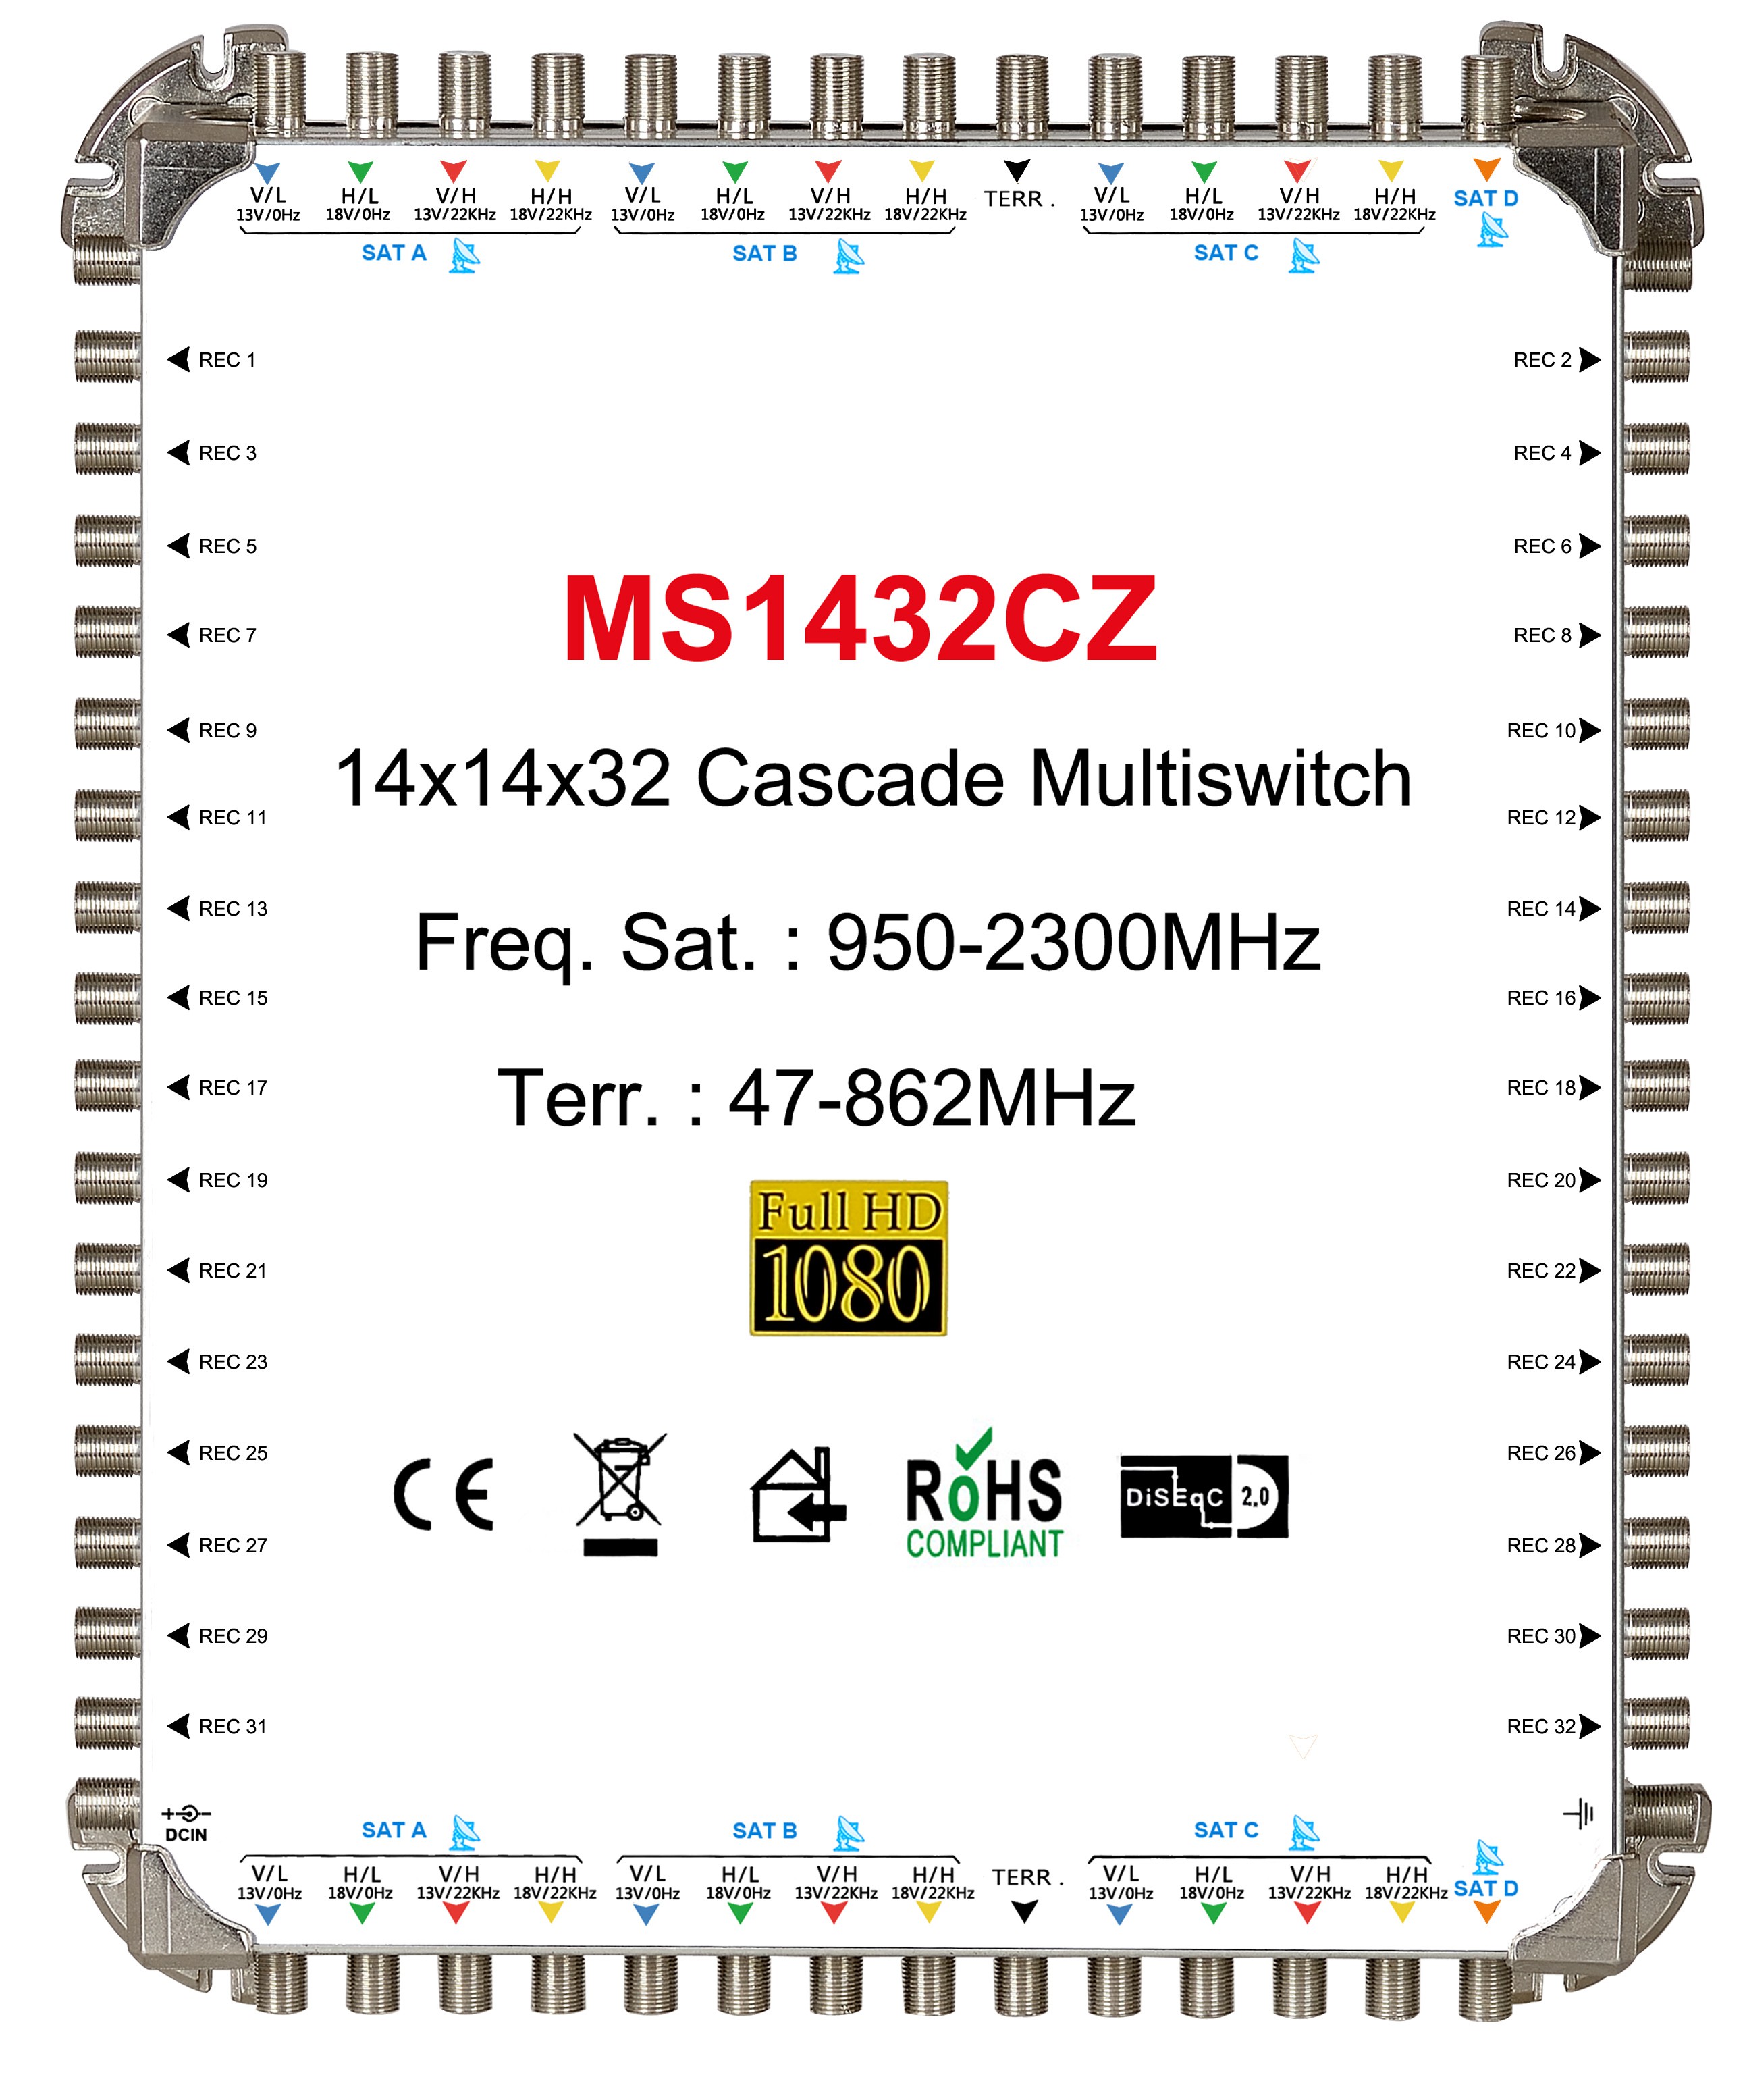 14x32 satellite multi-switch, Cascade multiswitch